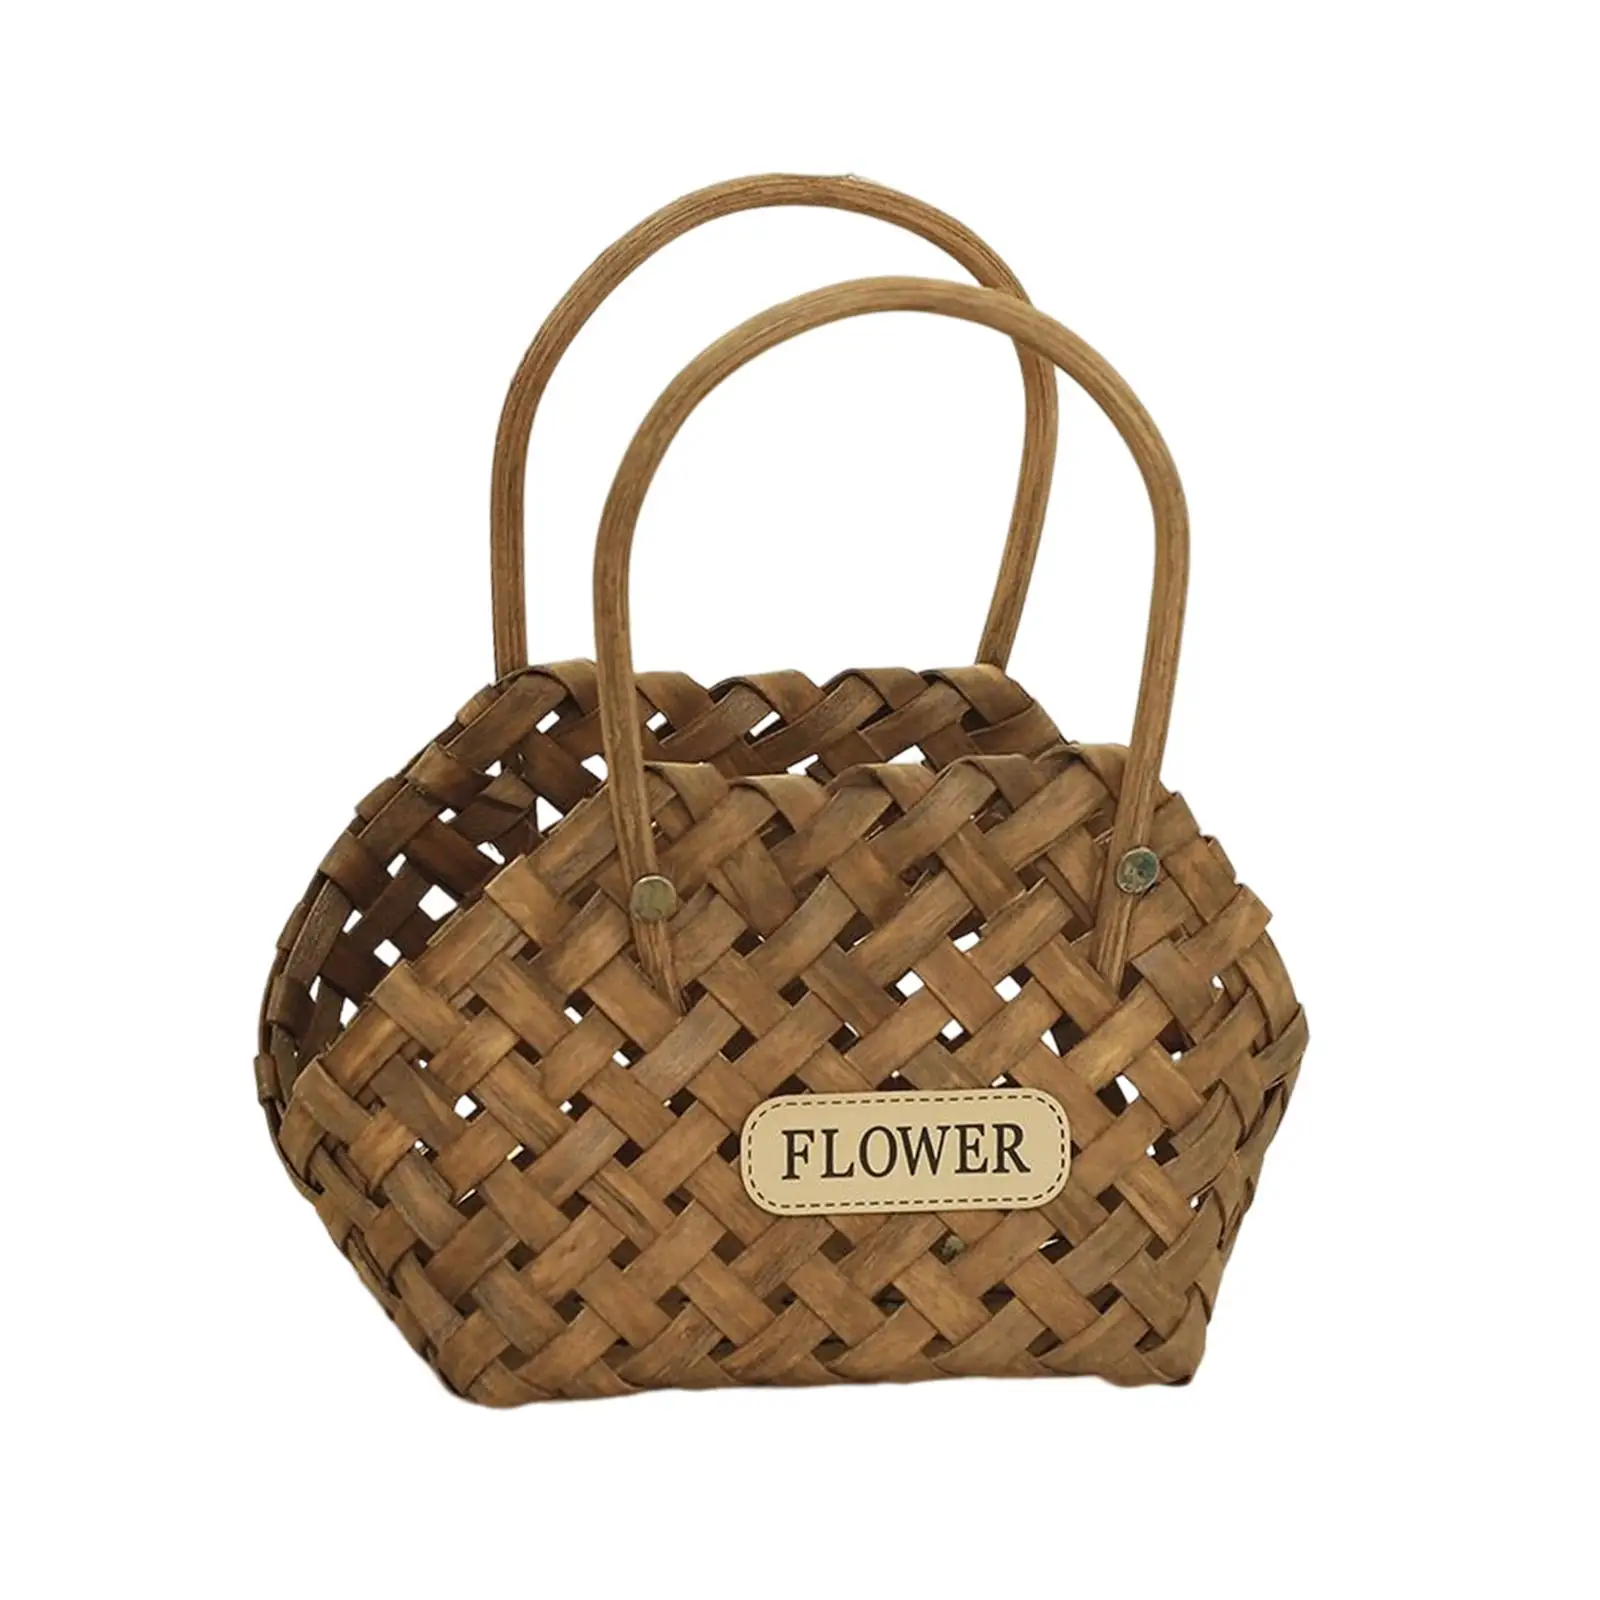 Woven Flower Basket Portable Rustic Wood Chip Picnic Basket Wooden Woven Basket for Wedding Stuff Pantry Organization Toy